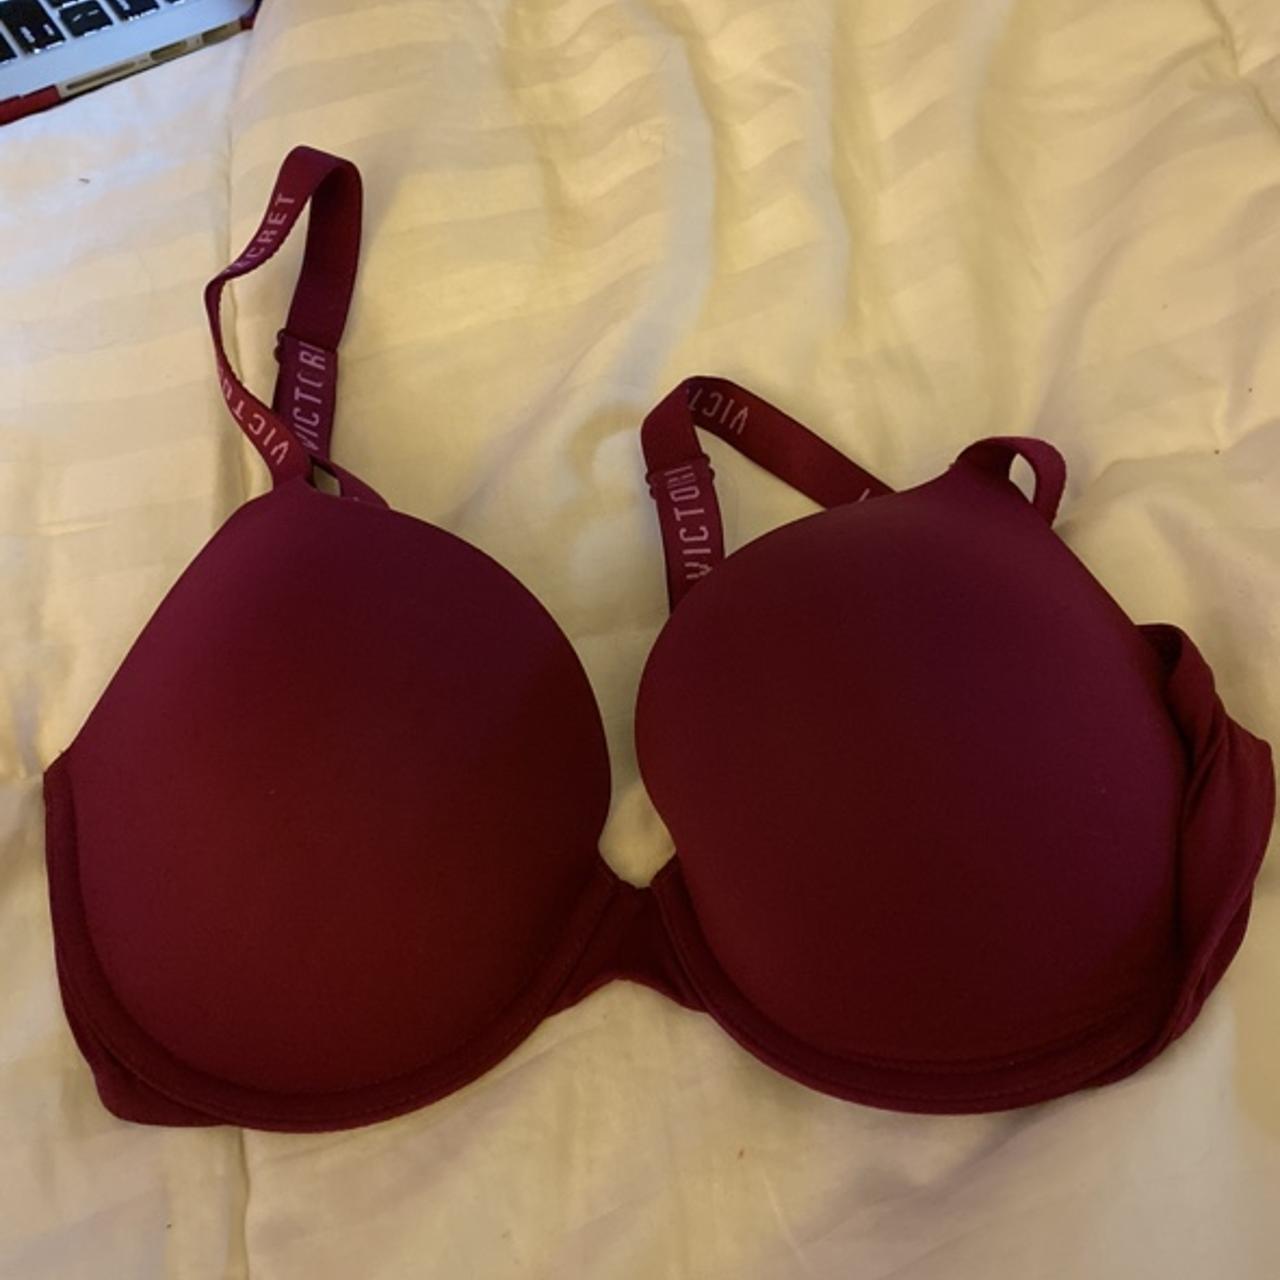 Burgundy push up bra from Victoria’s Secret